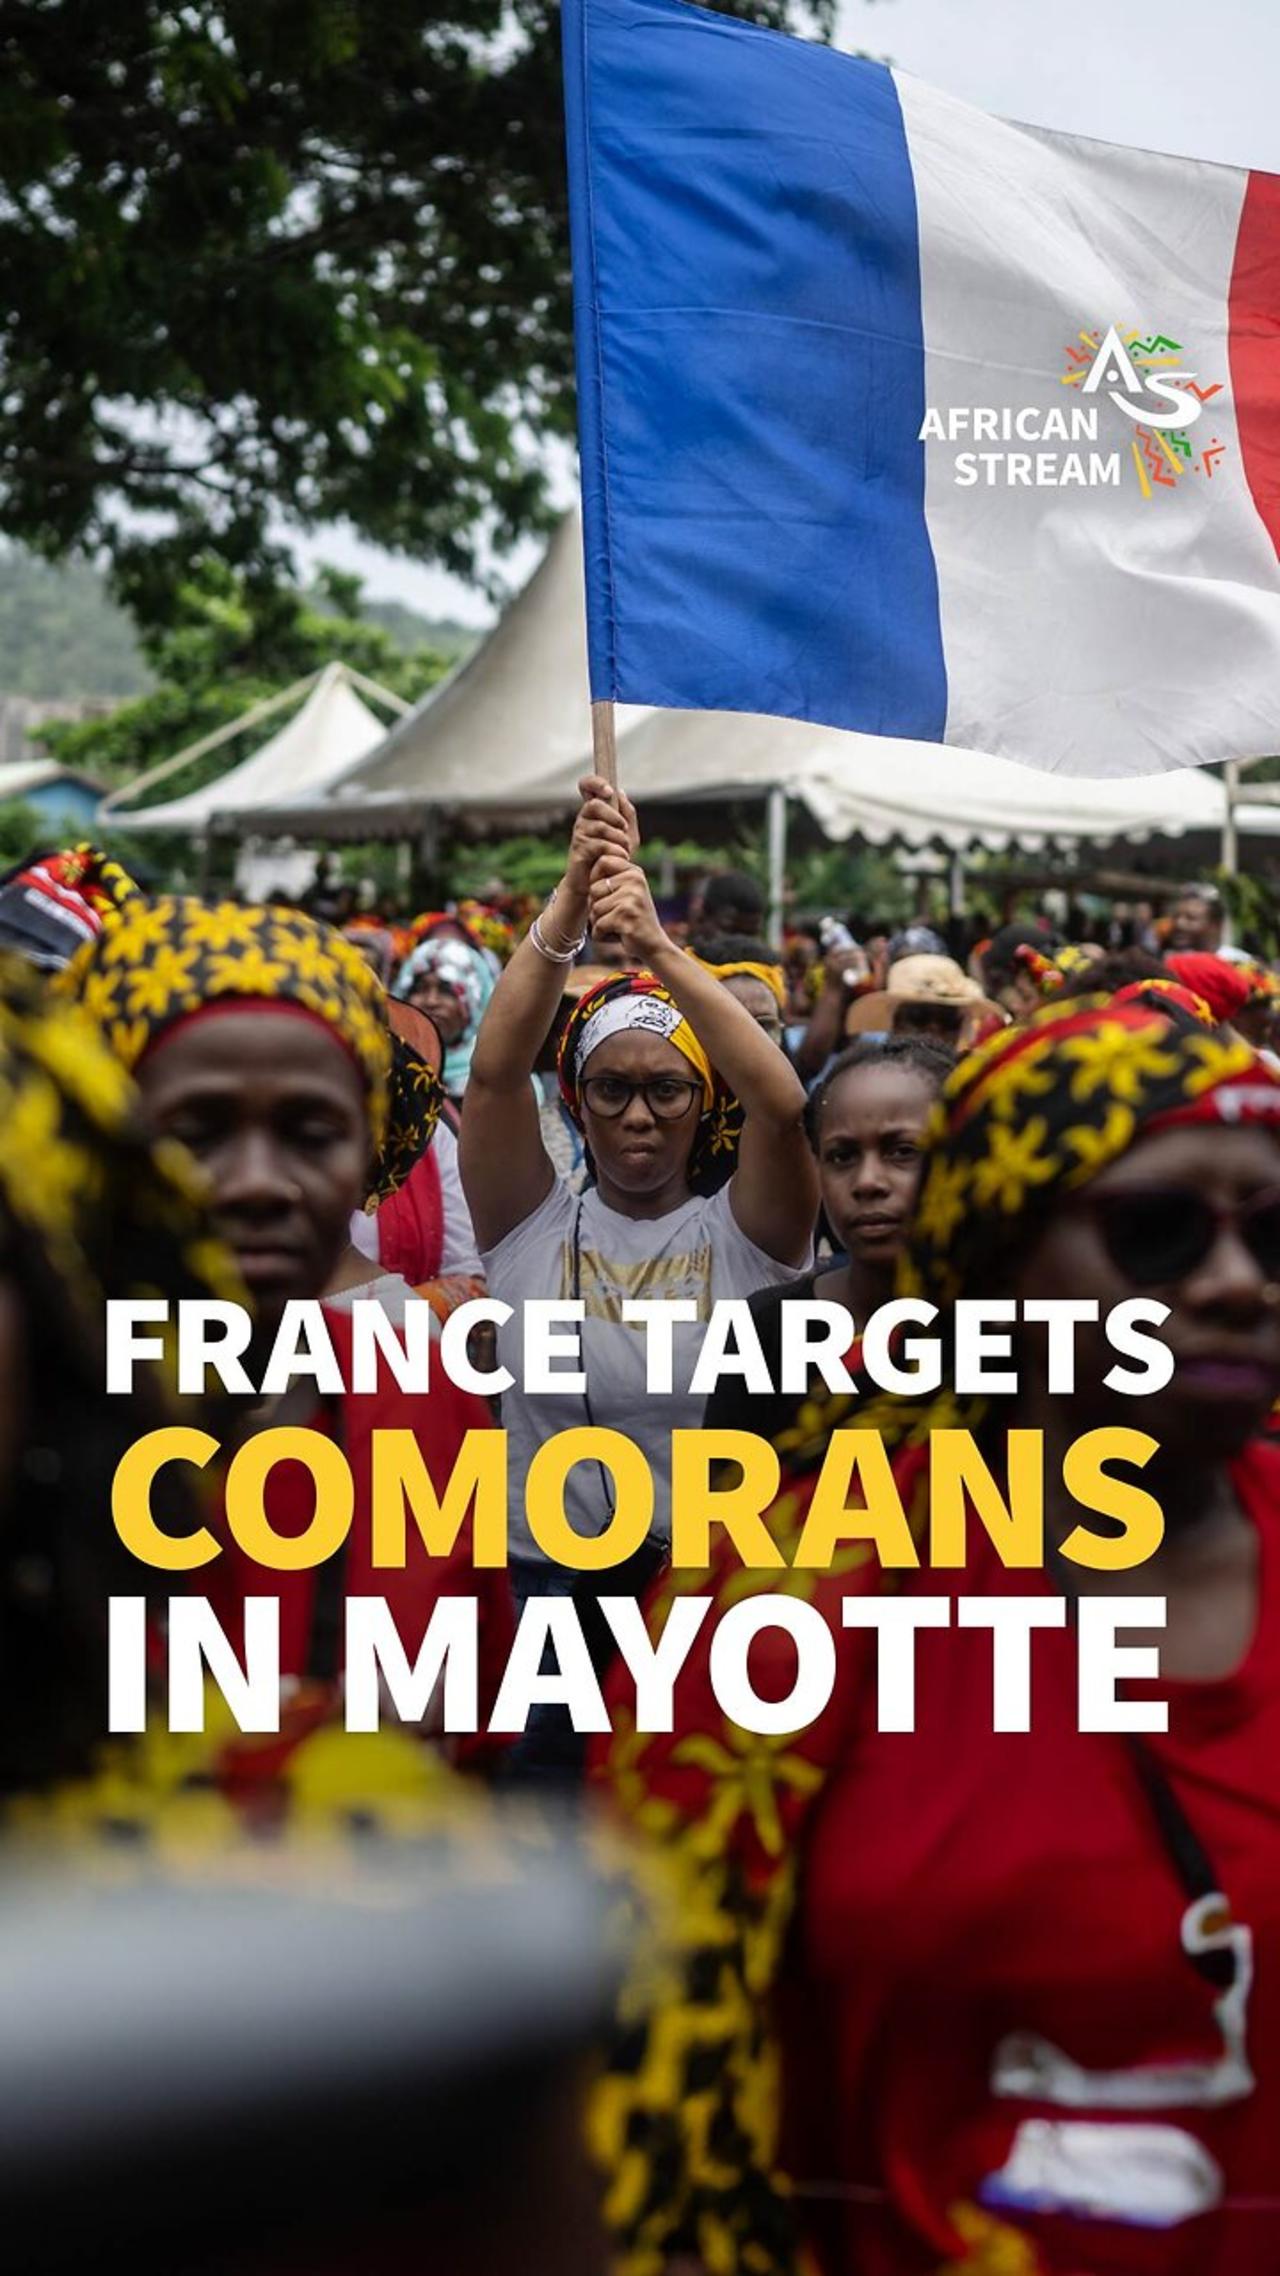 FRANCE TARGETS COMORANS IN MAYOTTE